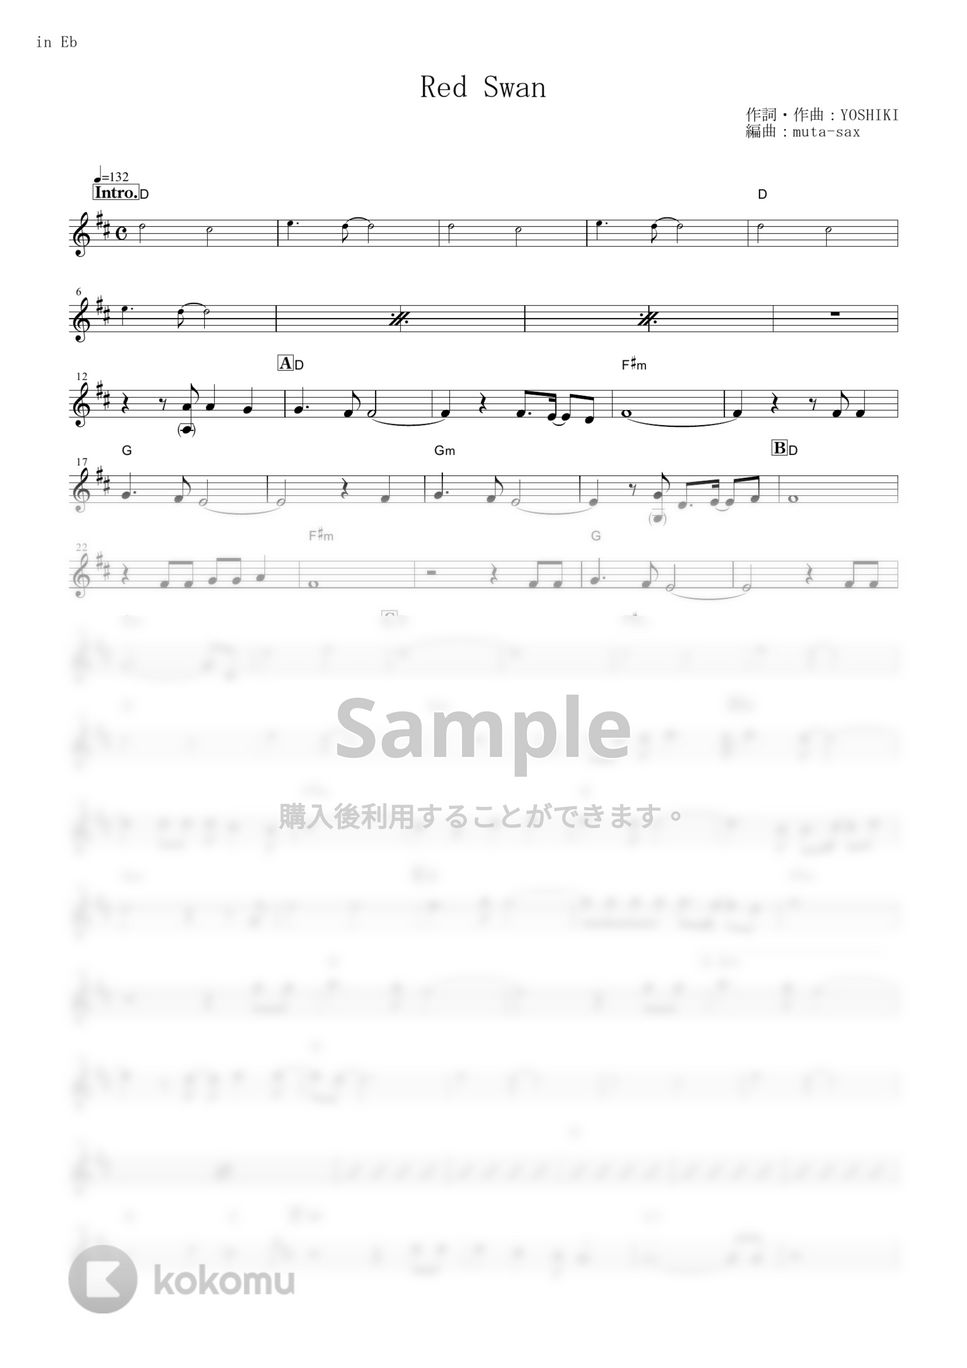 YOSHIKI feat. HYDE - Red Swan (『進撃の巨人』 / in Eb) by muta-sax